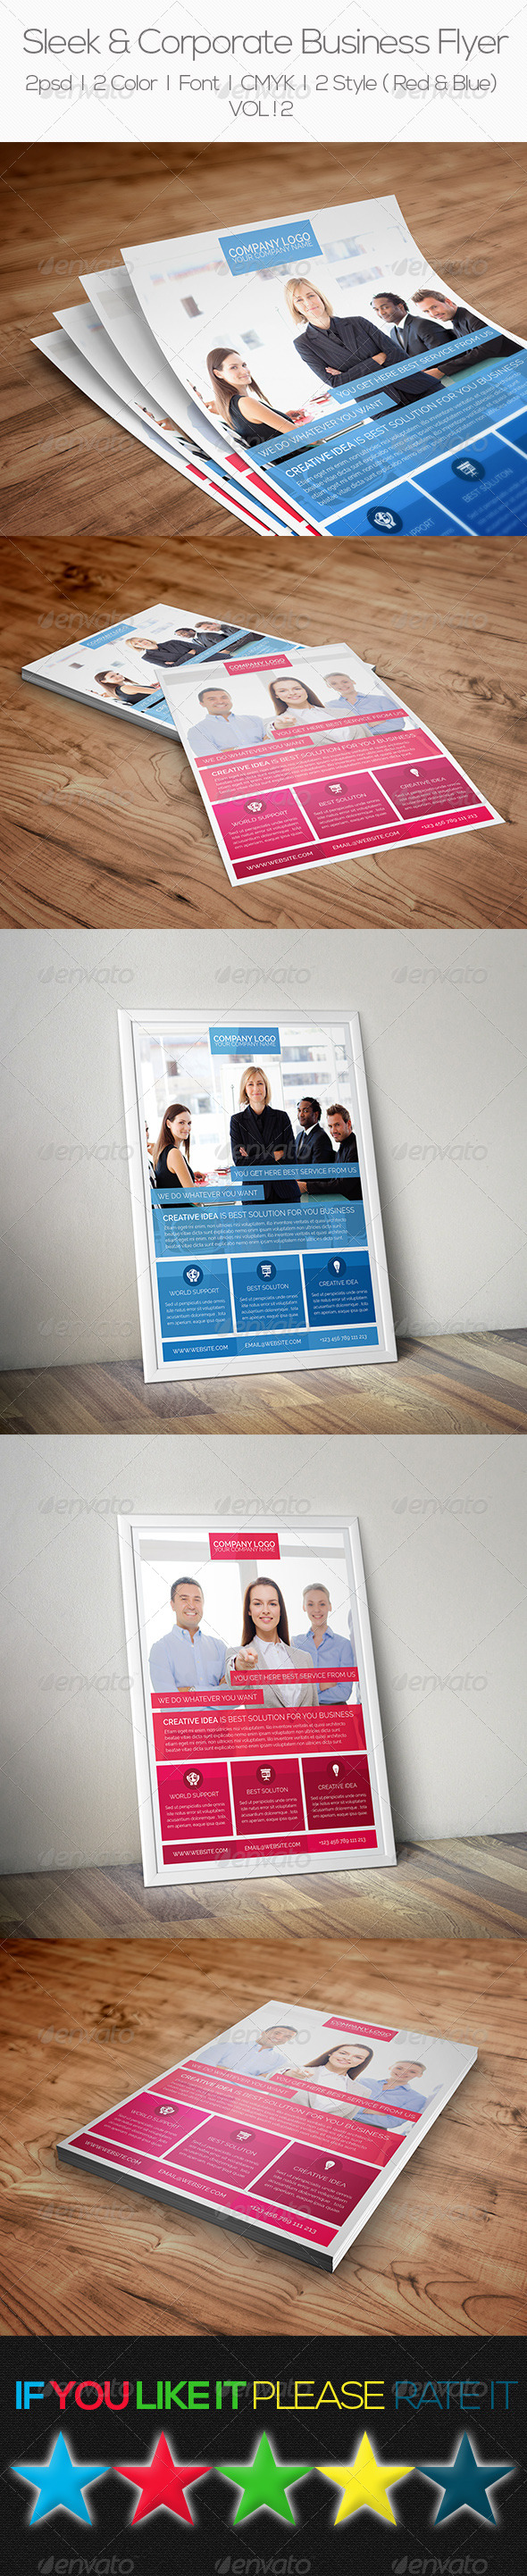 Sleek & Corporate Business Flyer (Corporate)